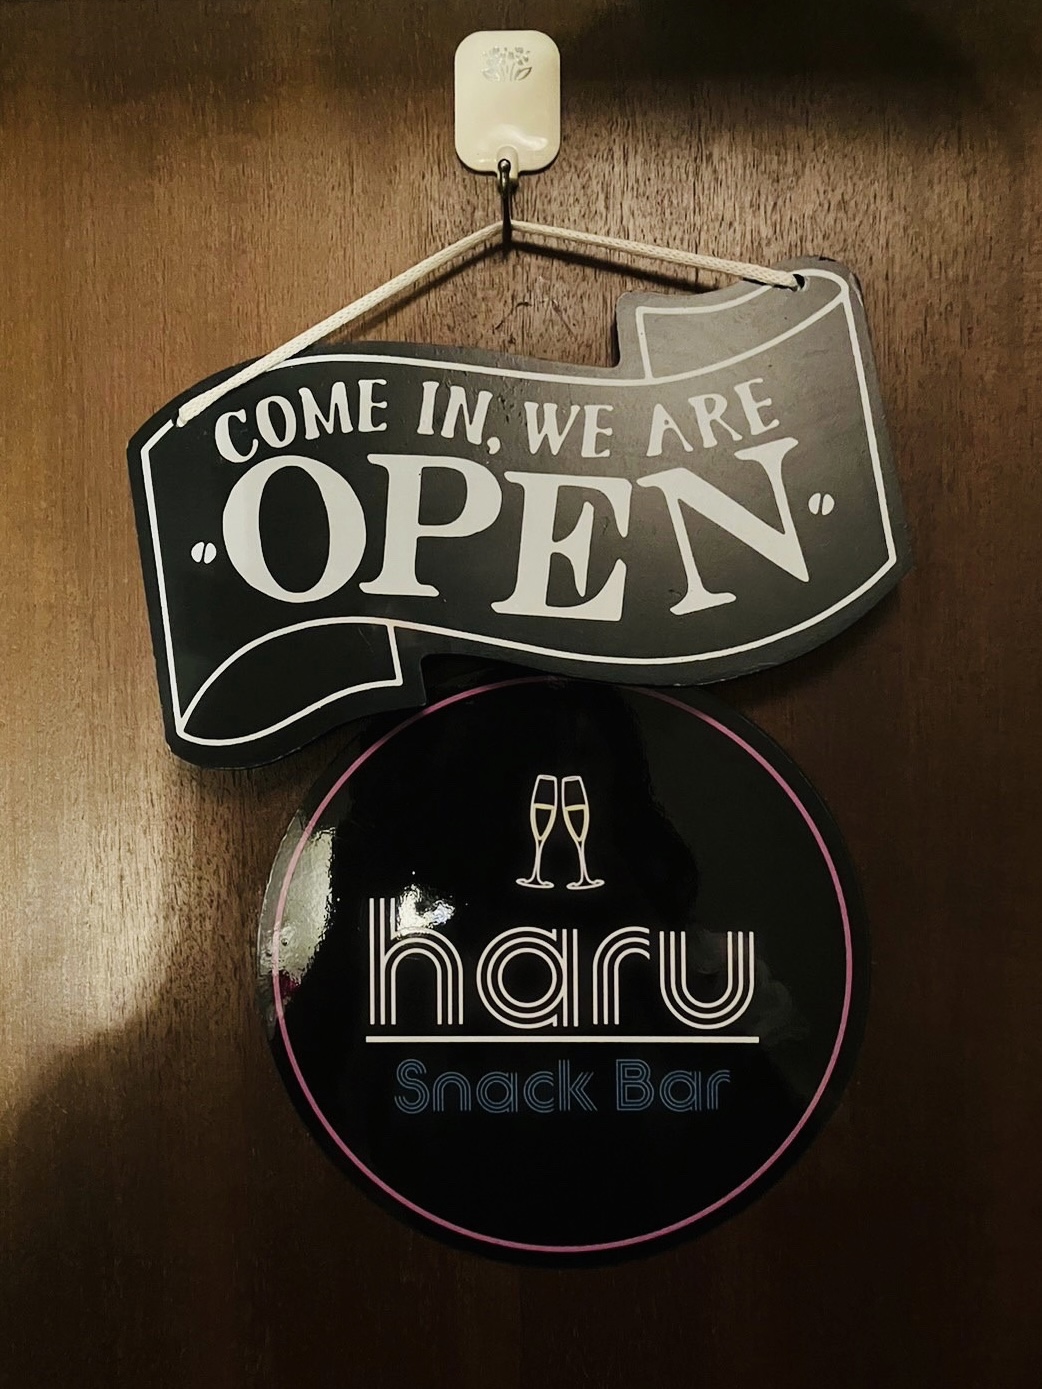 Snack bar haru